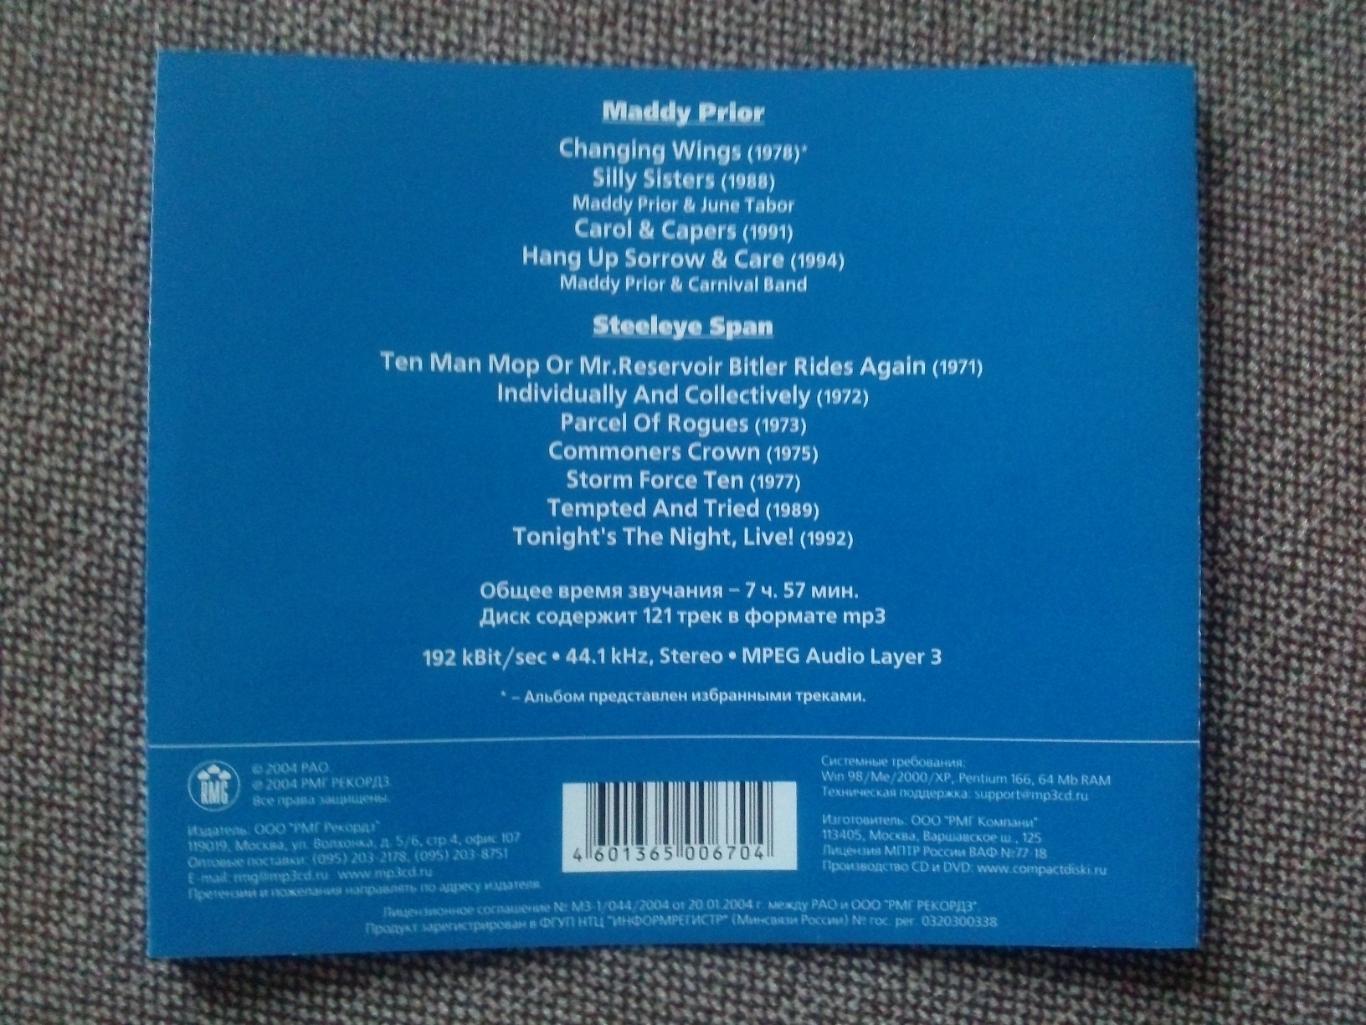 MP - 3 CD диск : Maddy Prior & Steeleye Span 1971 - 1994 гг. 11 альбомов Рок 7